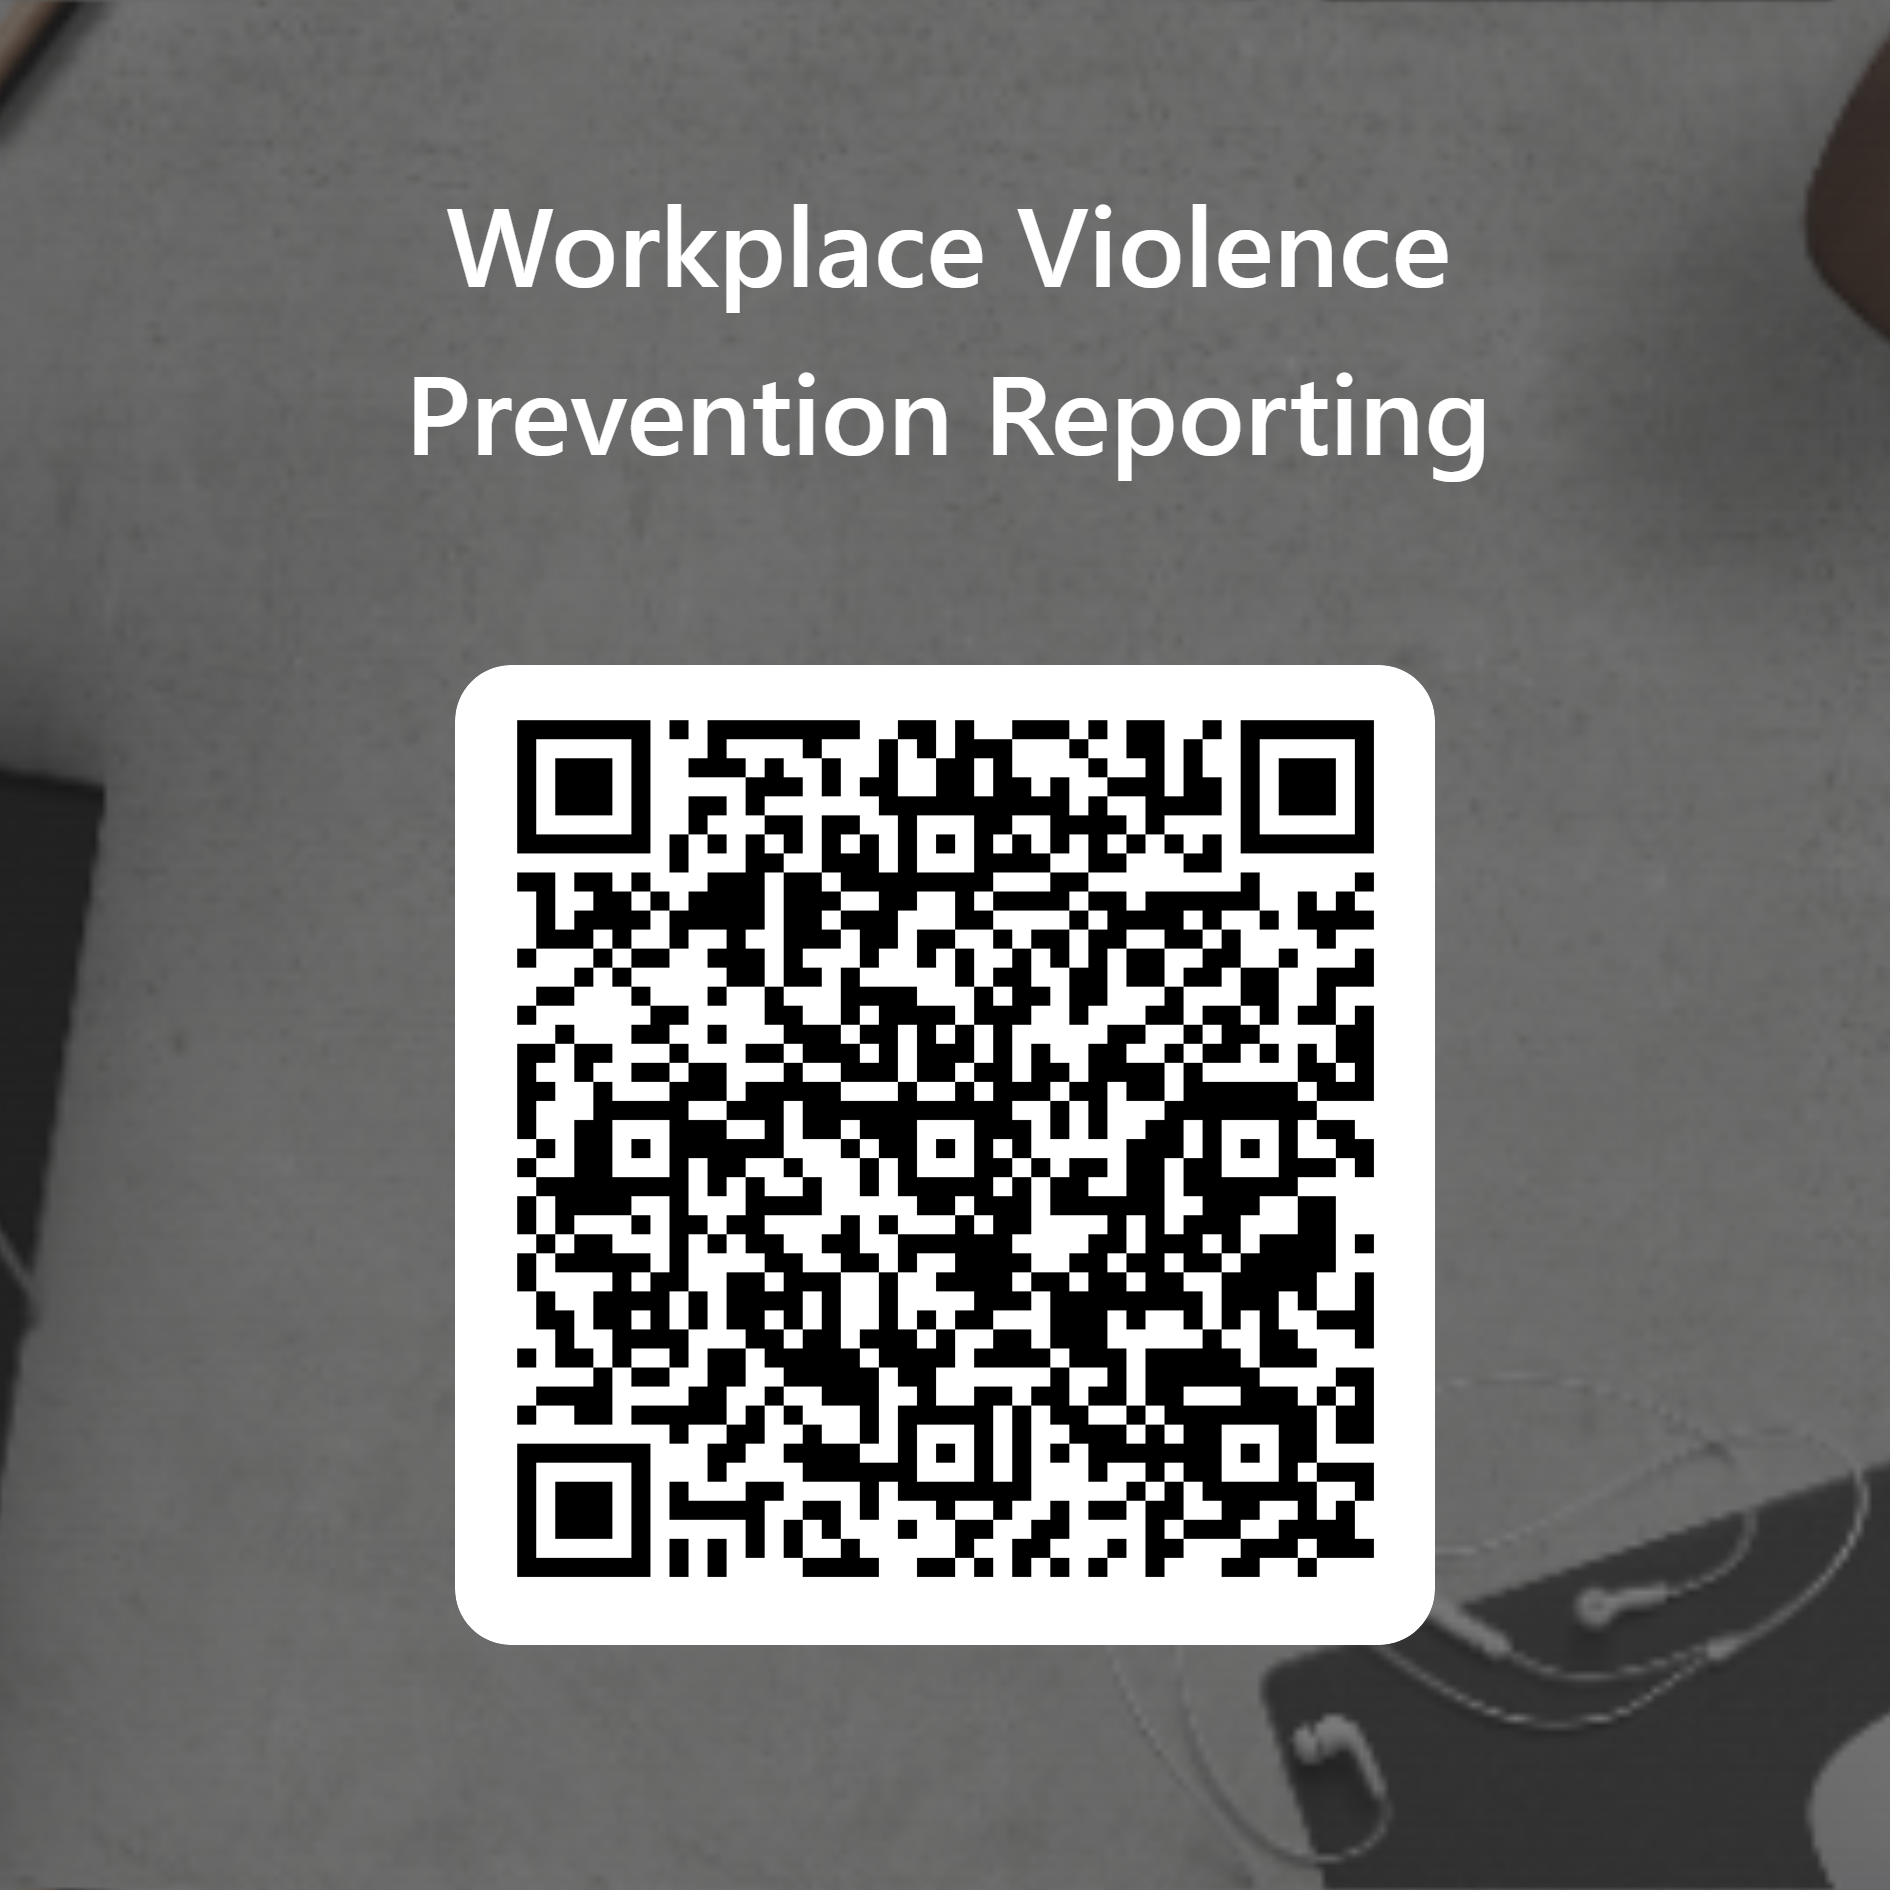 QR code Violence Prevention